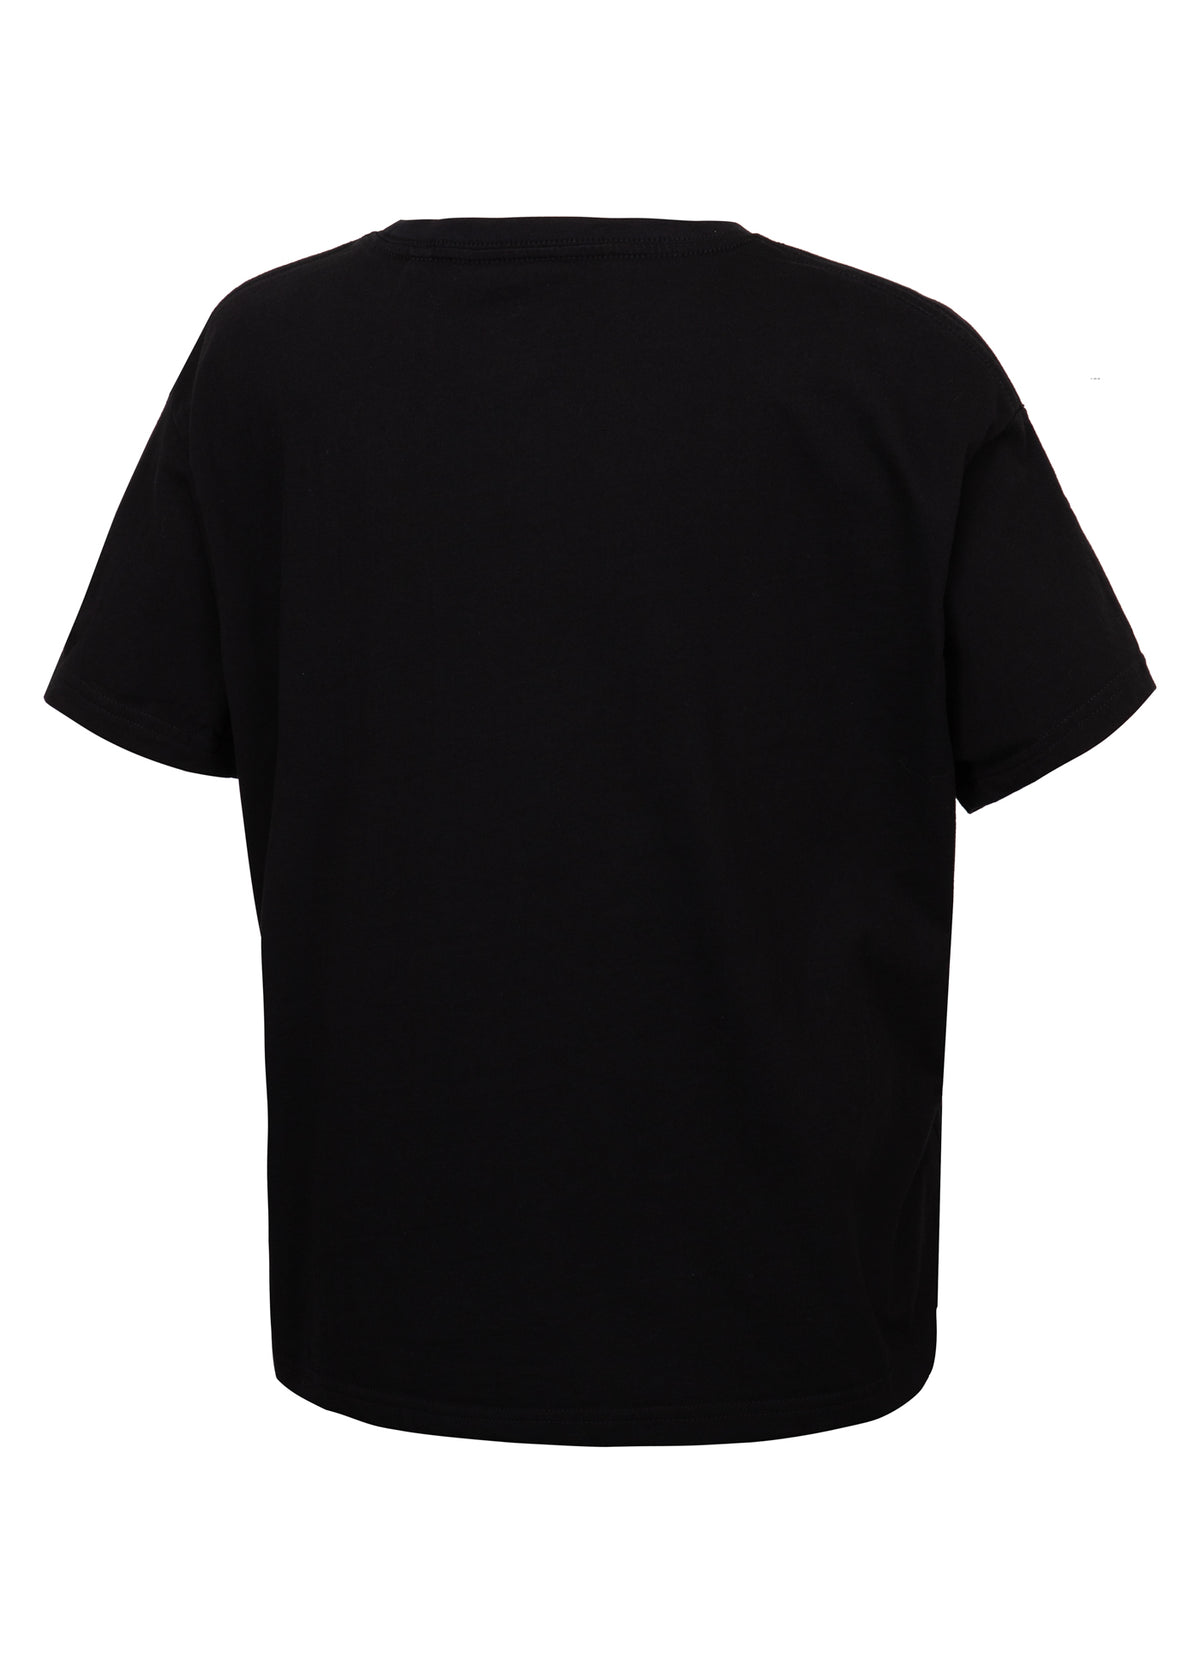 PRETTY OVERSIZE Black T-shirt - Pitbullstore.eu